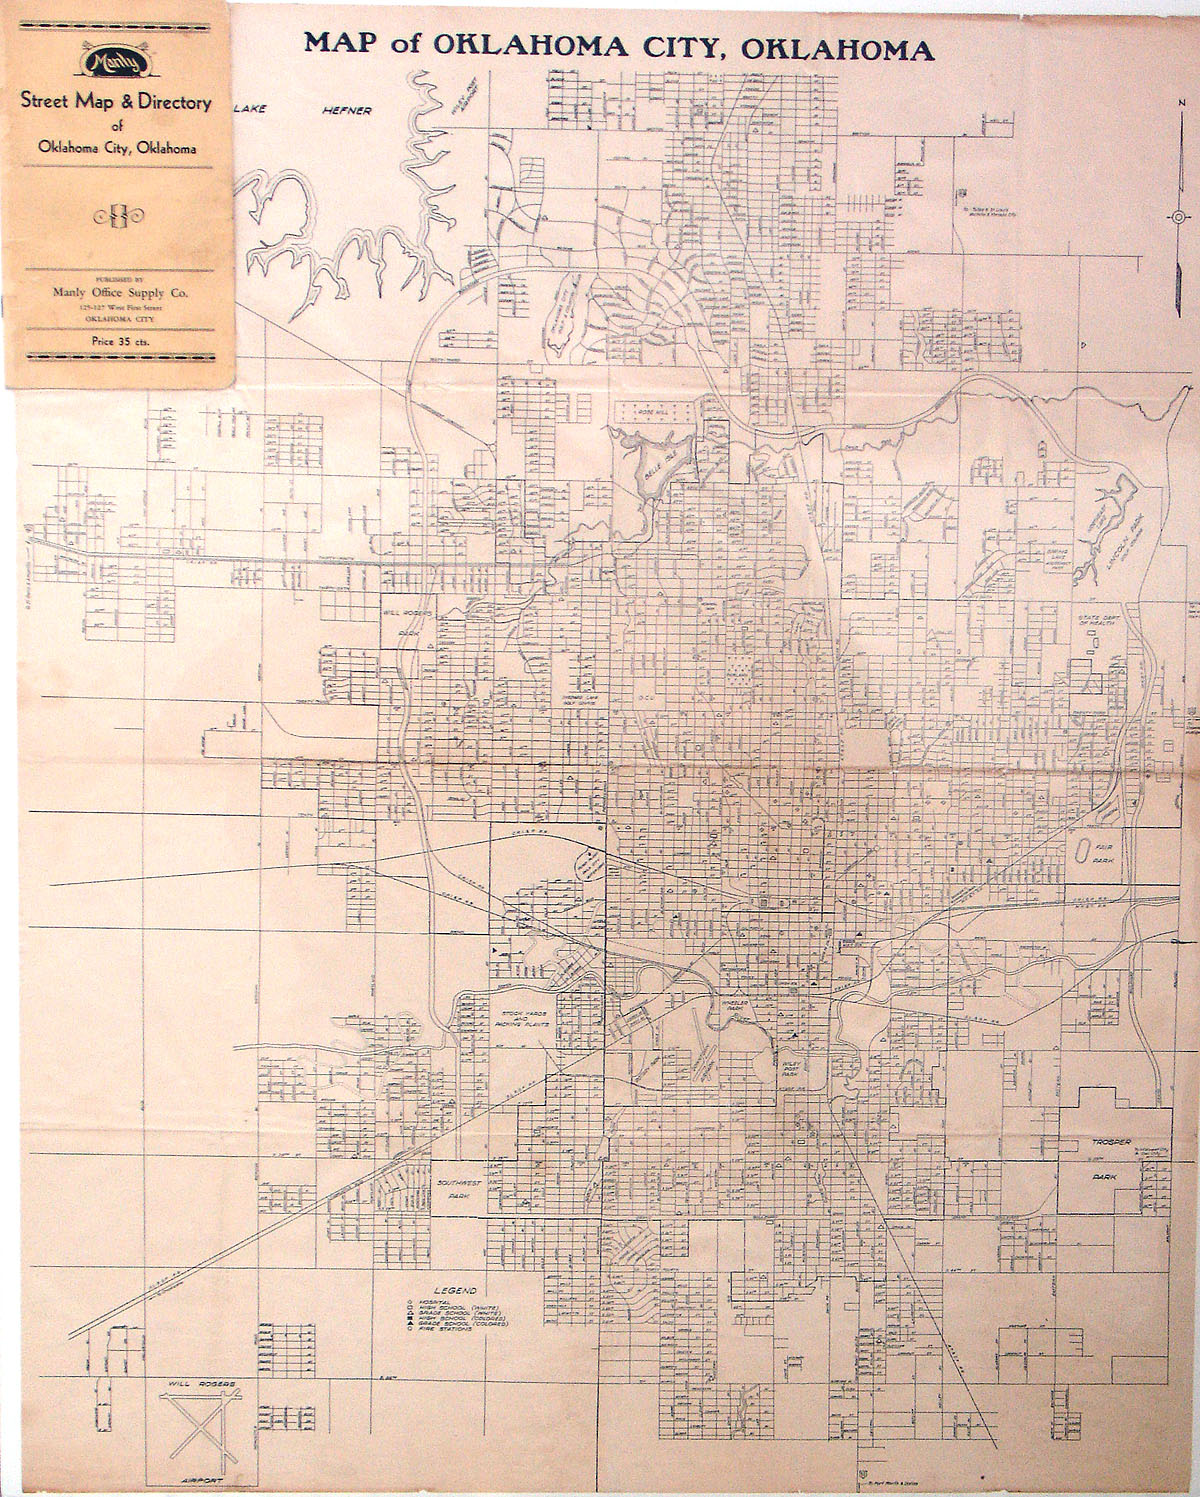 (OK - OKC) Map of Oklahoma City, Oklahoma